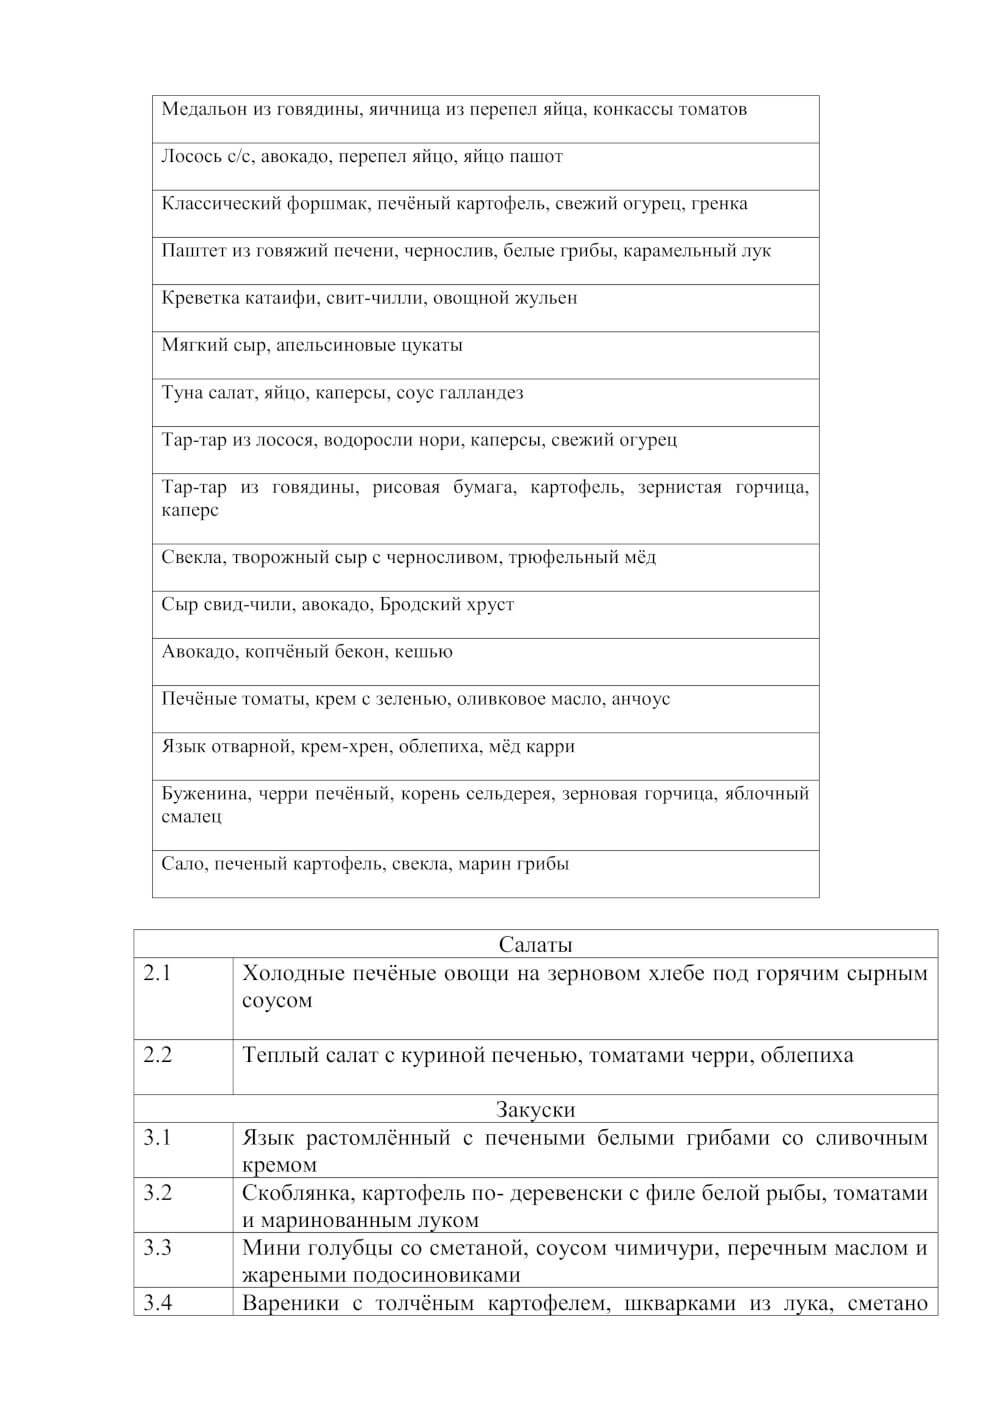 Translate Russian menu into English with basic formatting (source)